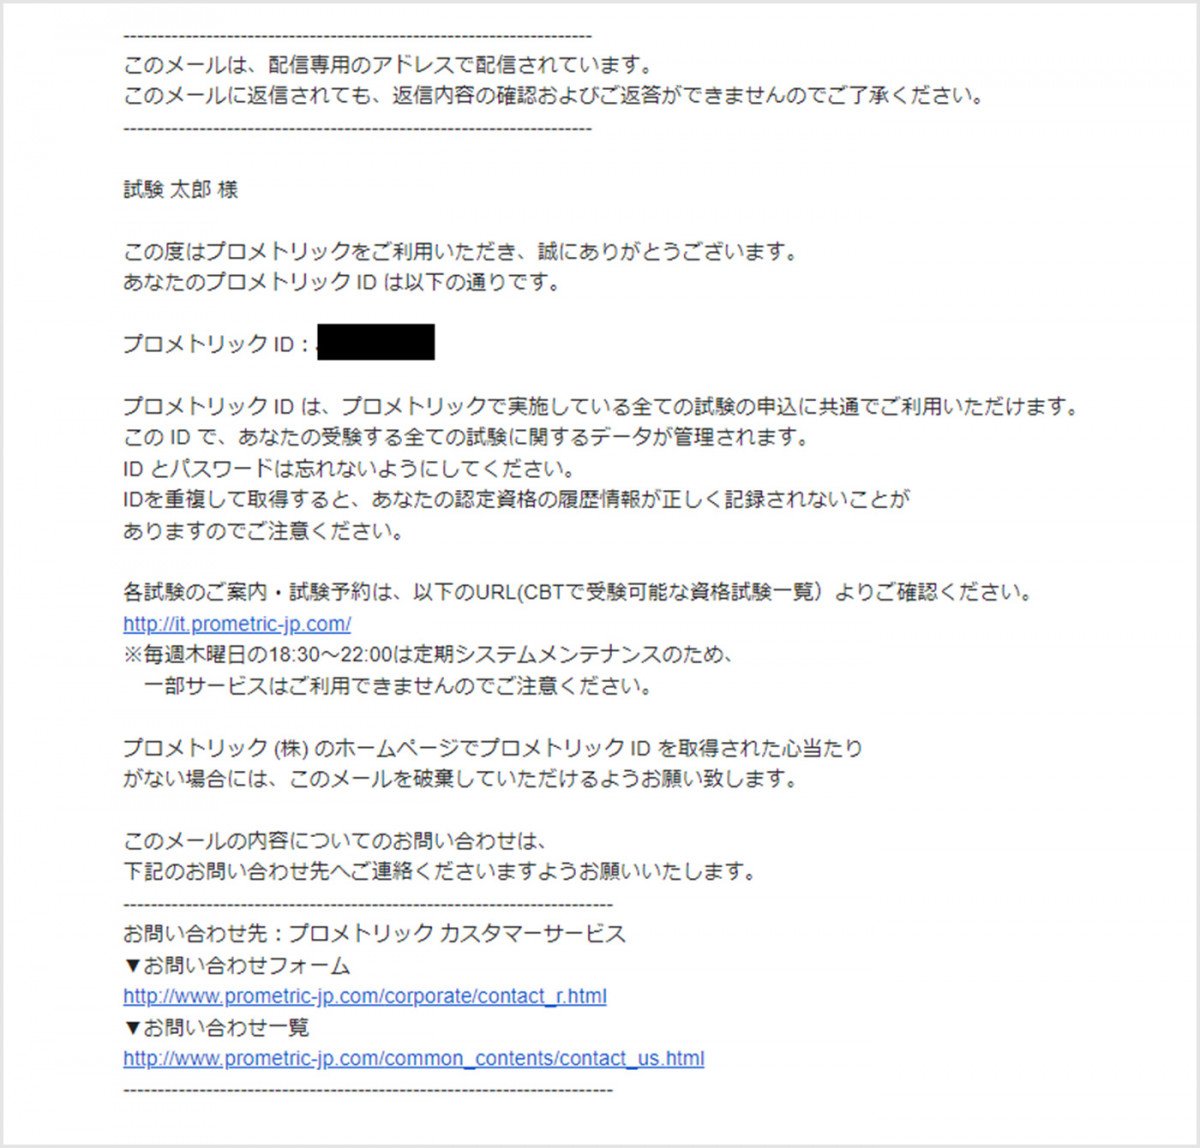 Sample email sent from "prometric@prometric-jp.com"